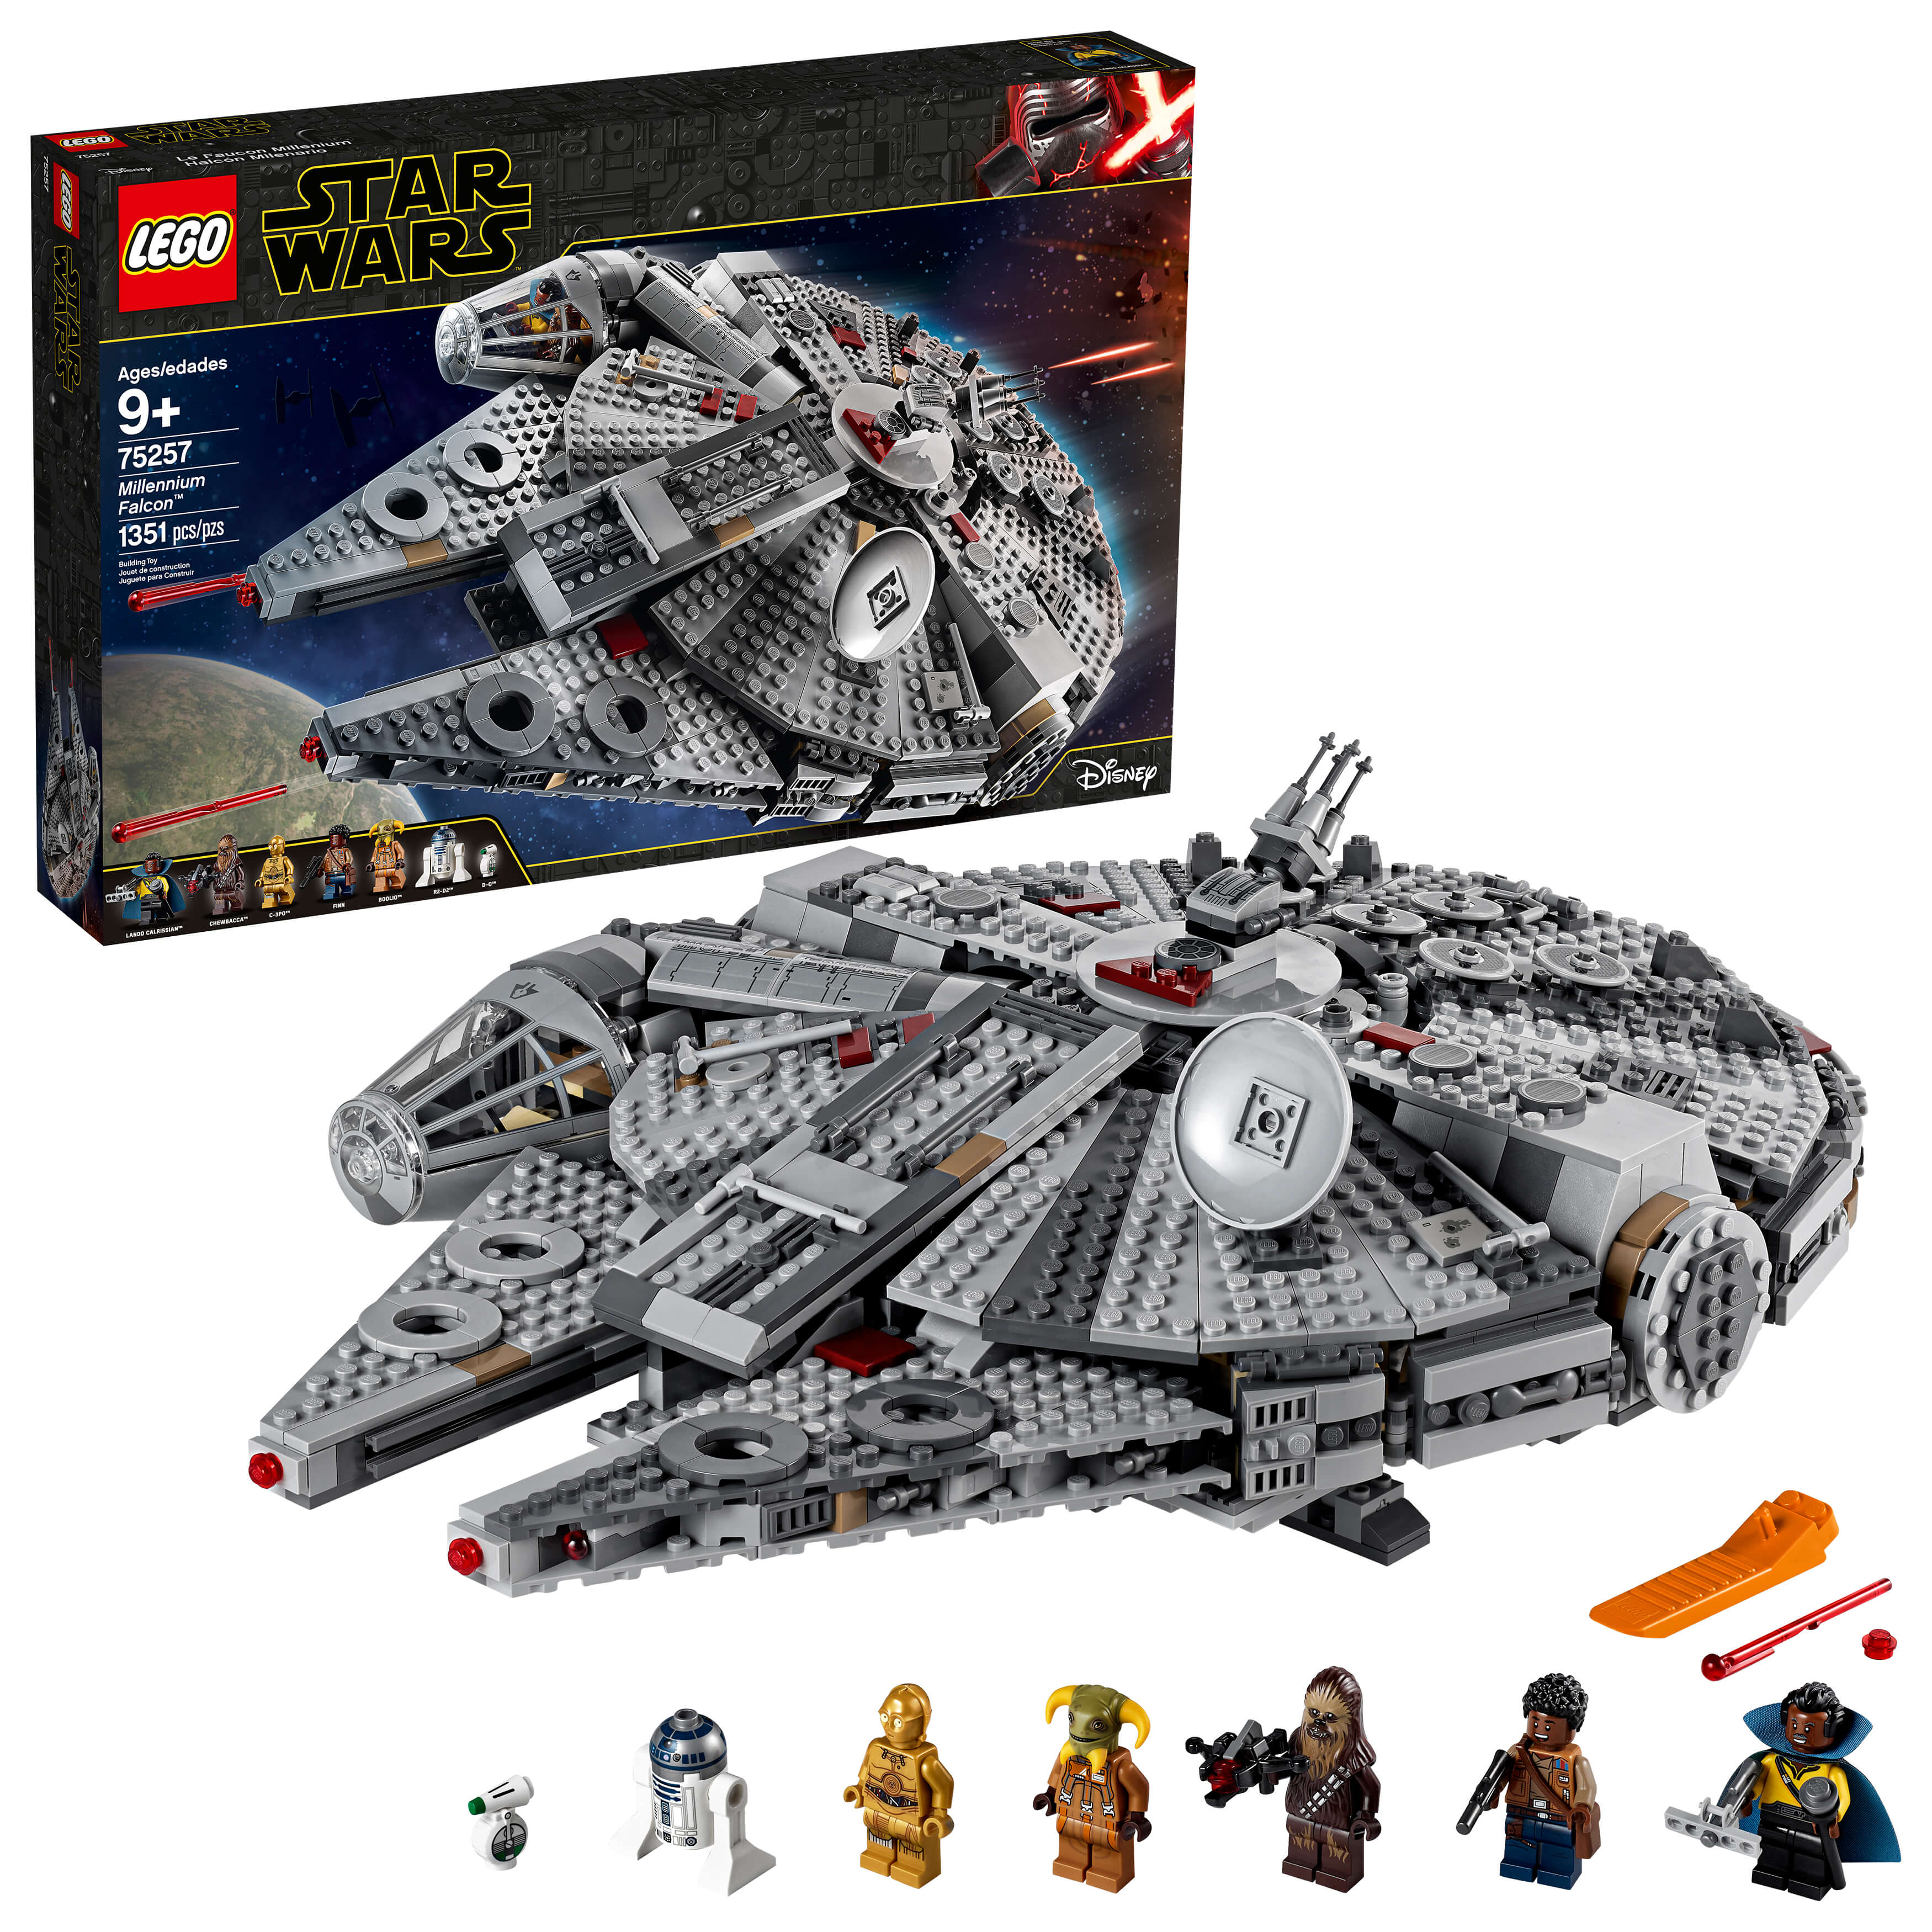 LEGO® Star Wars: The Rise of Skywalker Millennium Falcon 75257 Building Kit (1,351 Pieces)